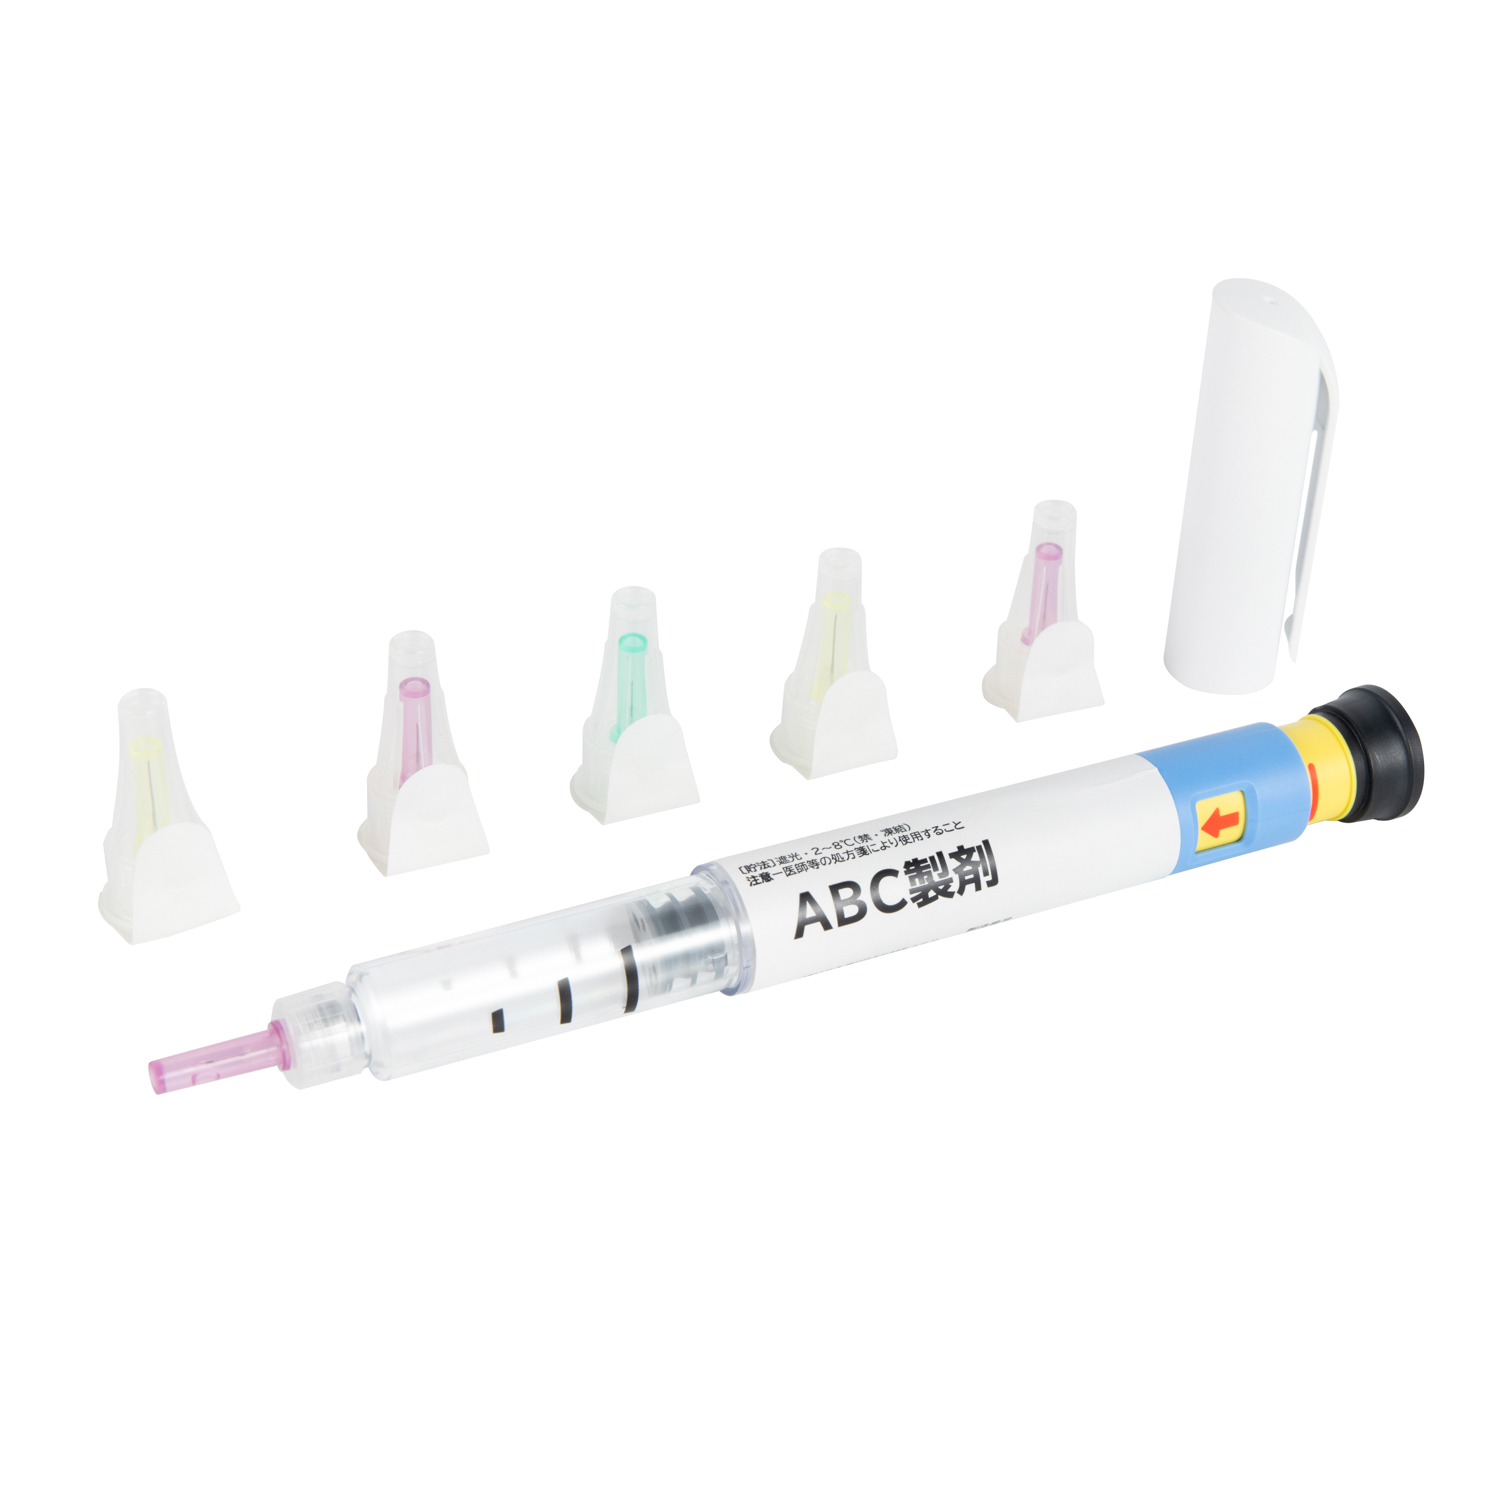 Insulin Pen Needle